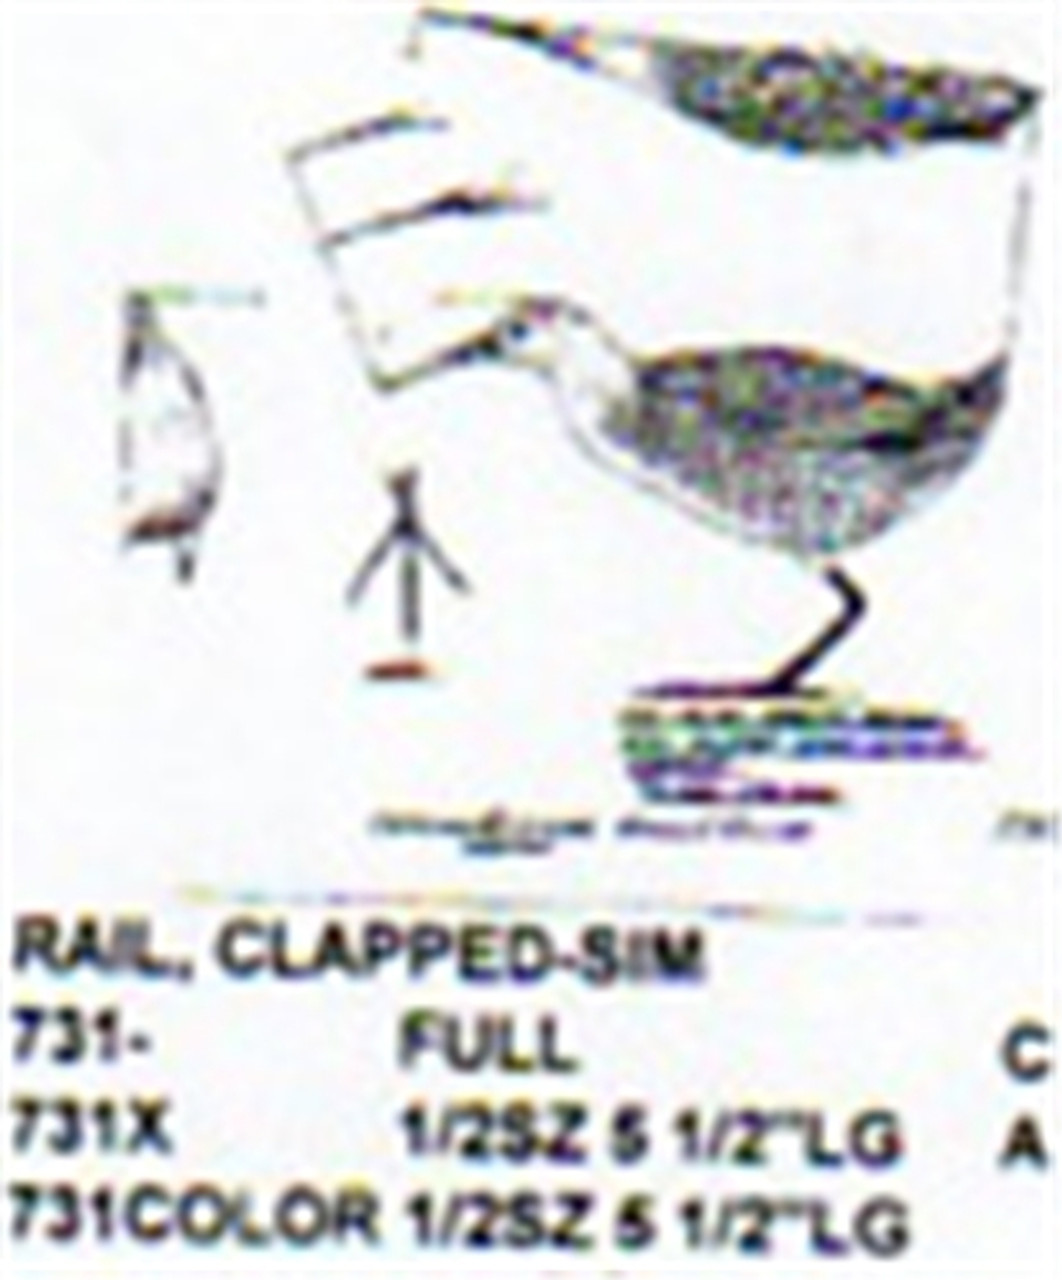 Clapper Rail Standing 1/2 size